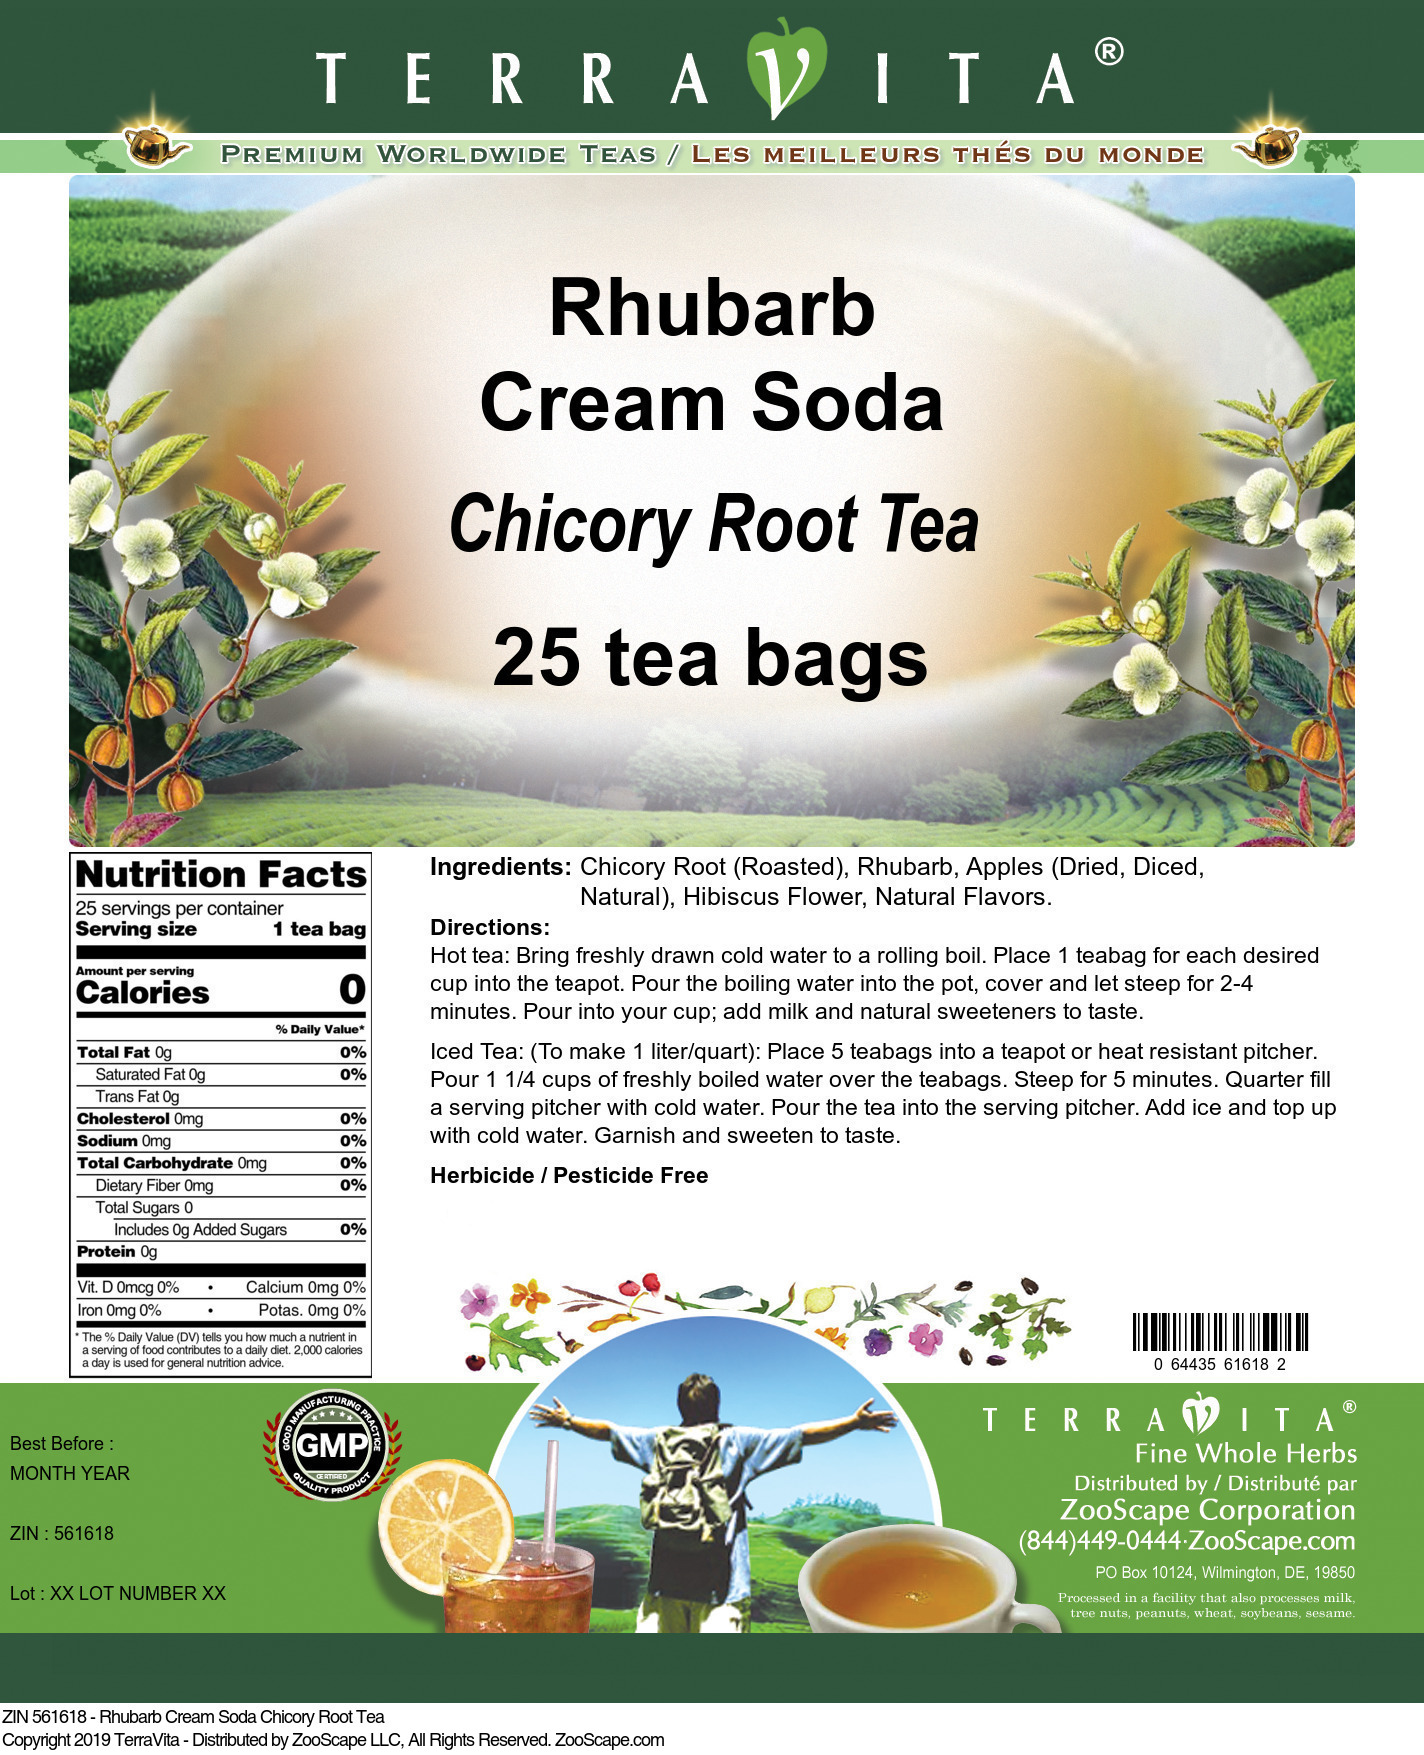 Rhubarb Cream Soda Chicory Root Tea - Label